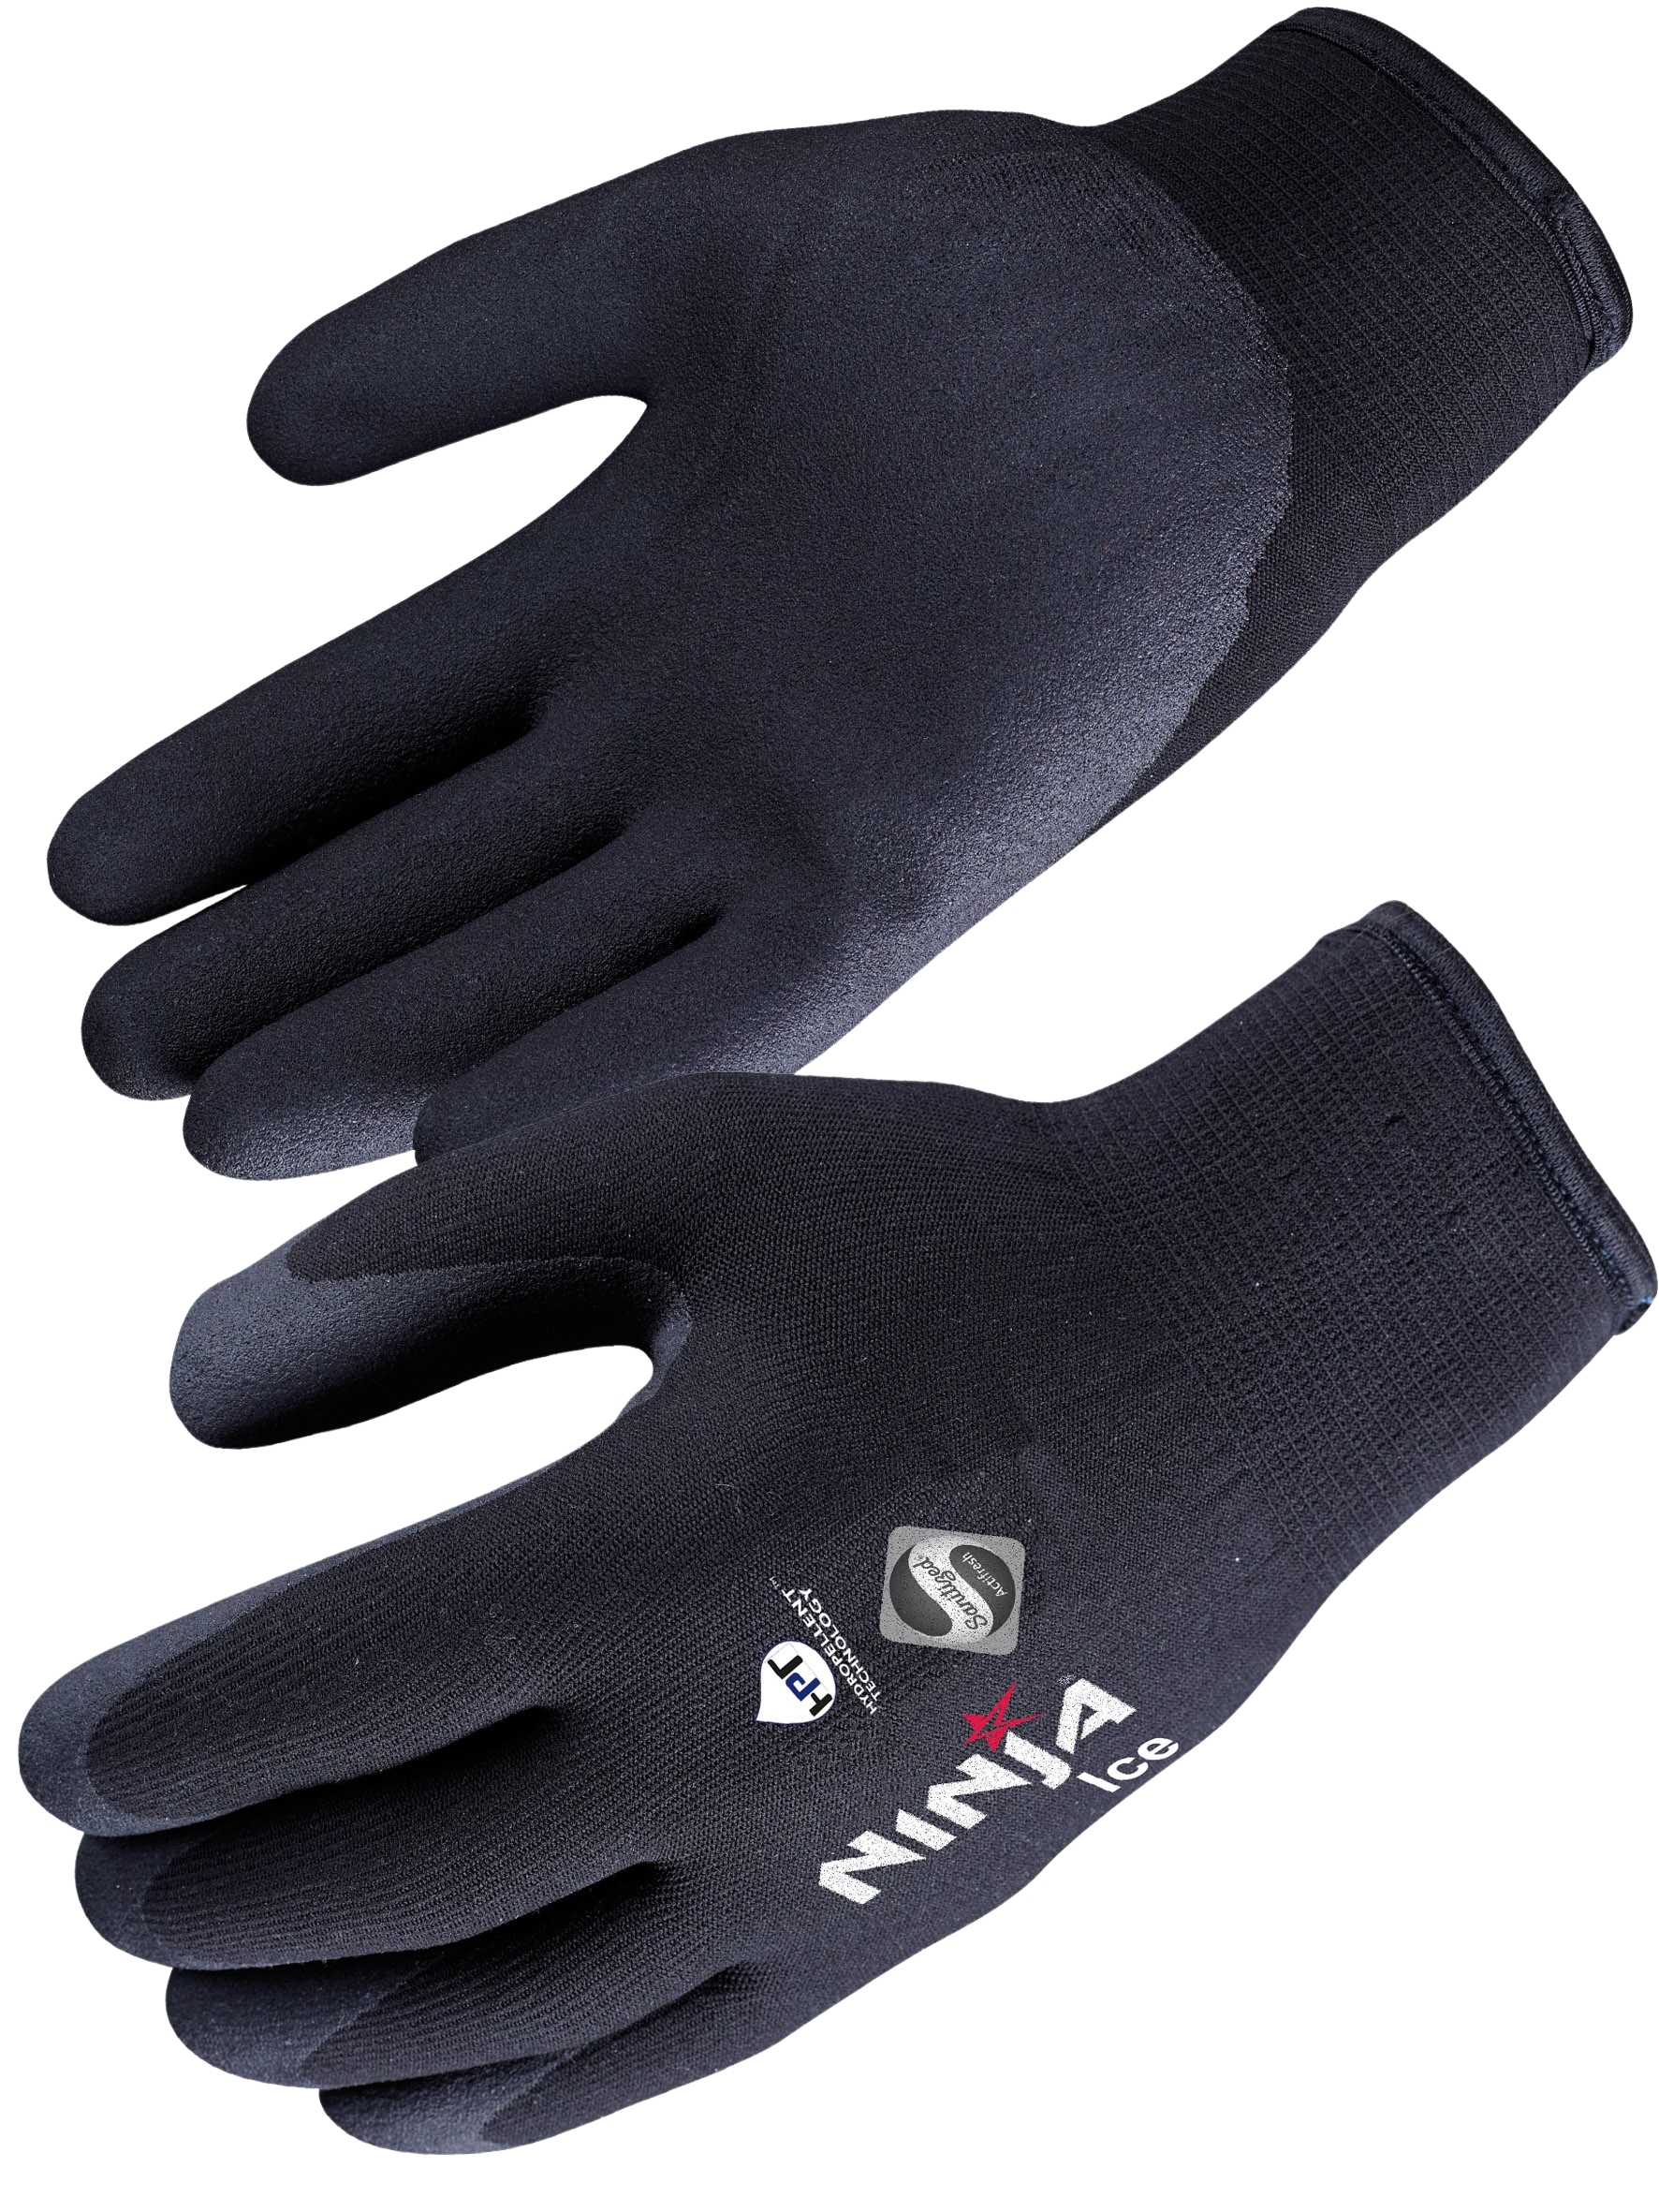 Cold Protection Gloves NINJA ICE